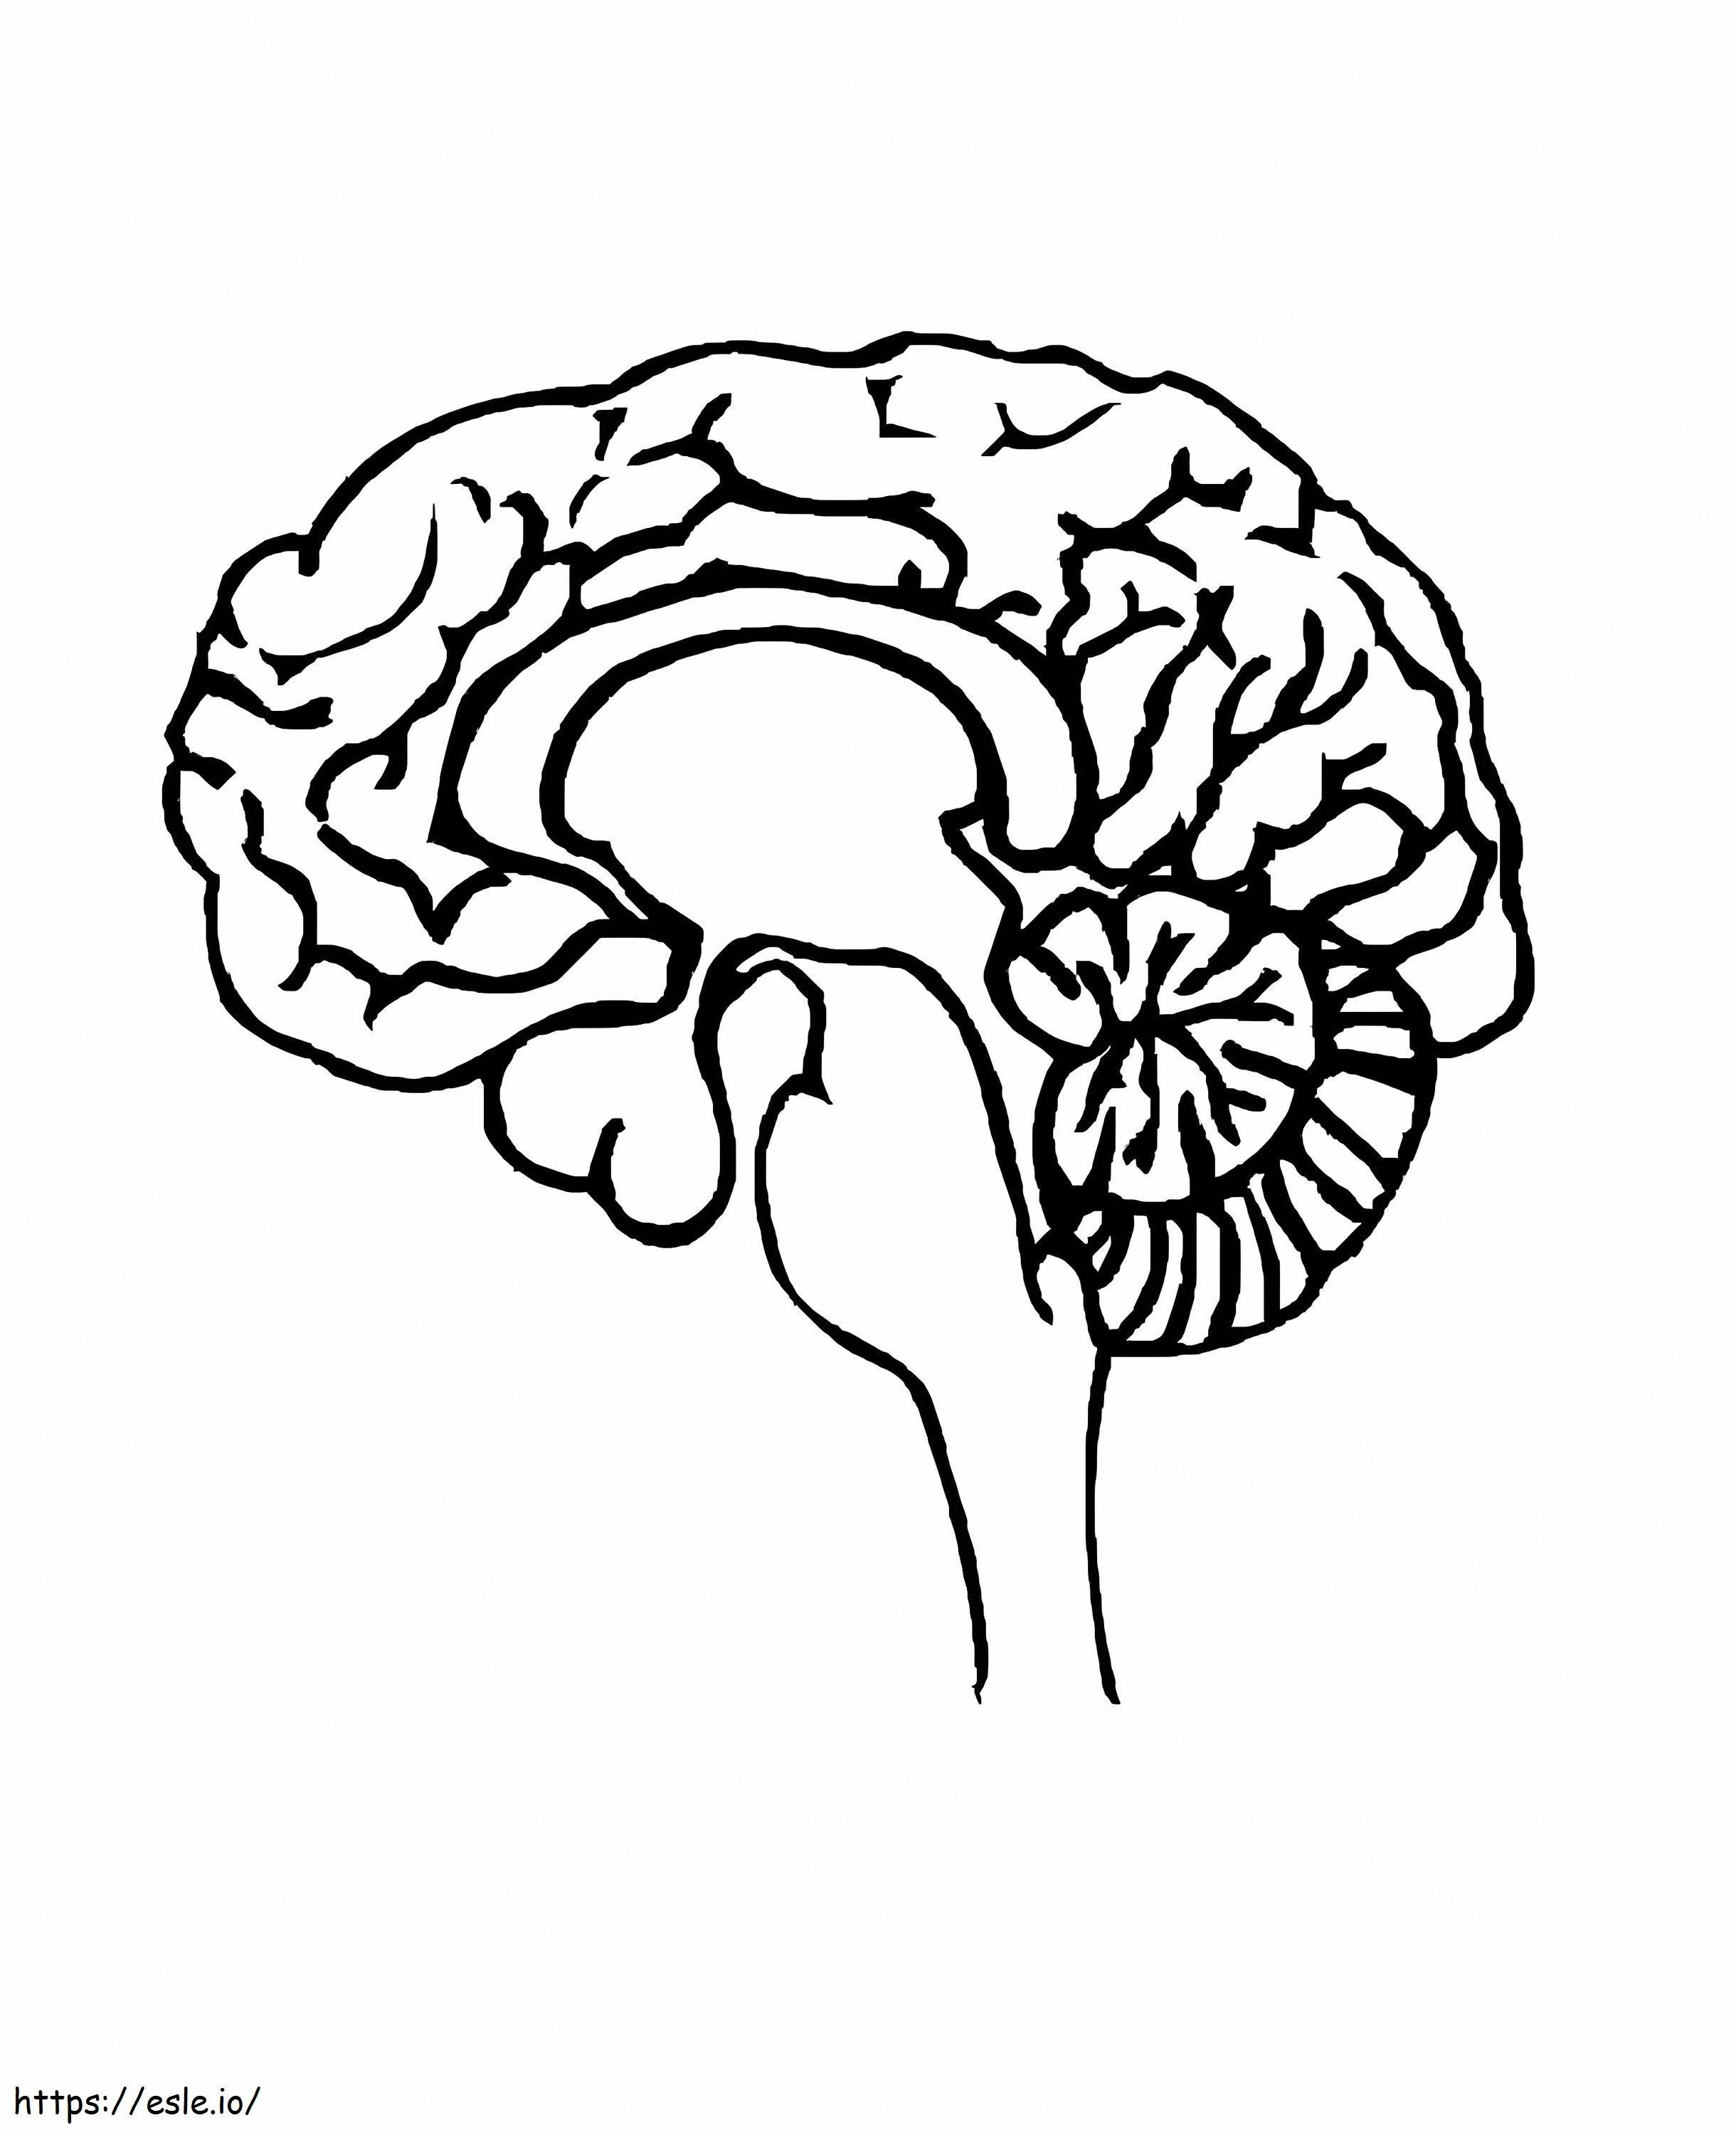 Cérebro Humano Imprimível para colorir